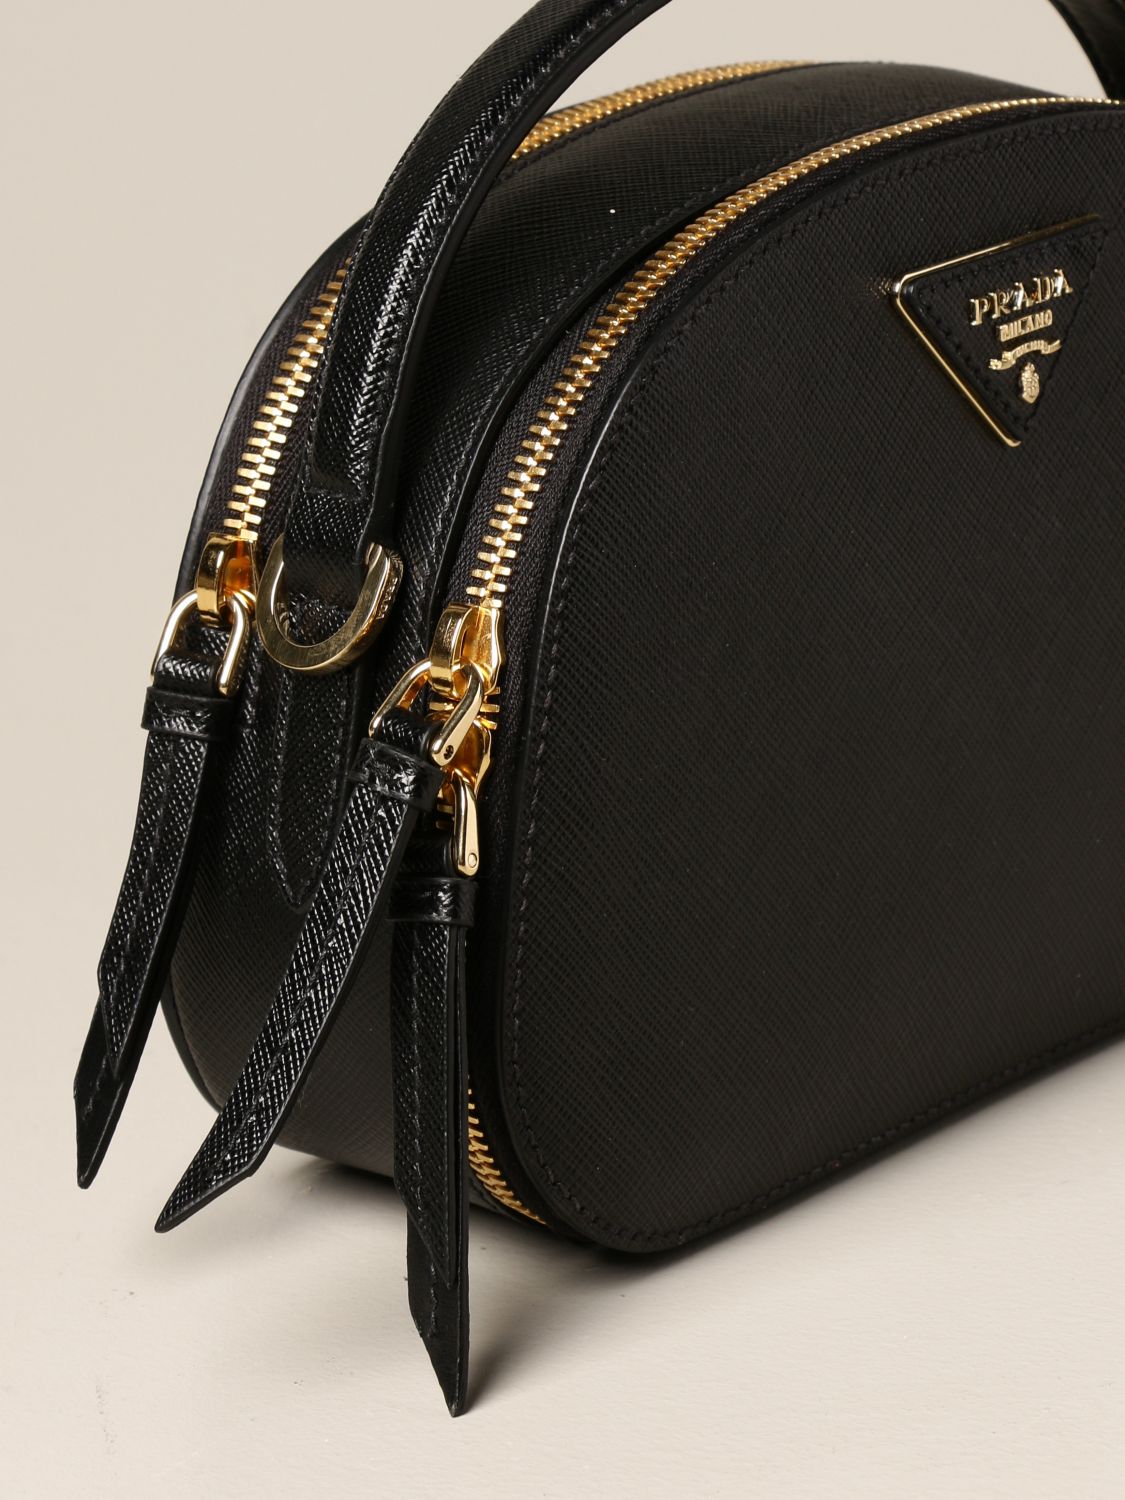 Prada Odette Saffiano Leather Bag- Black